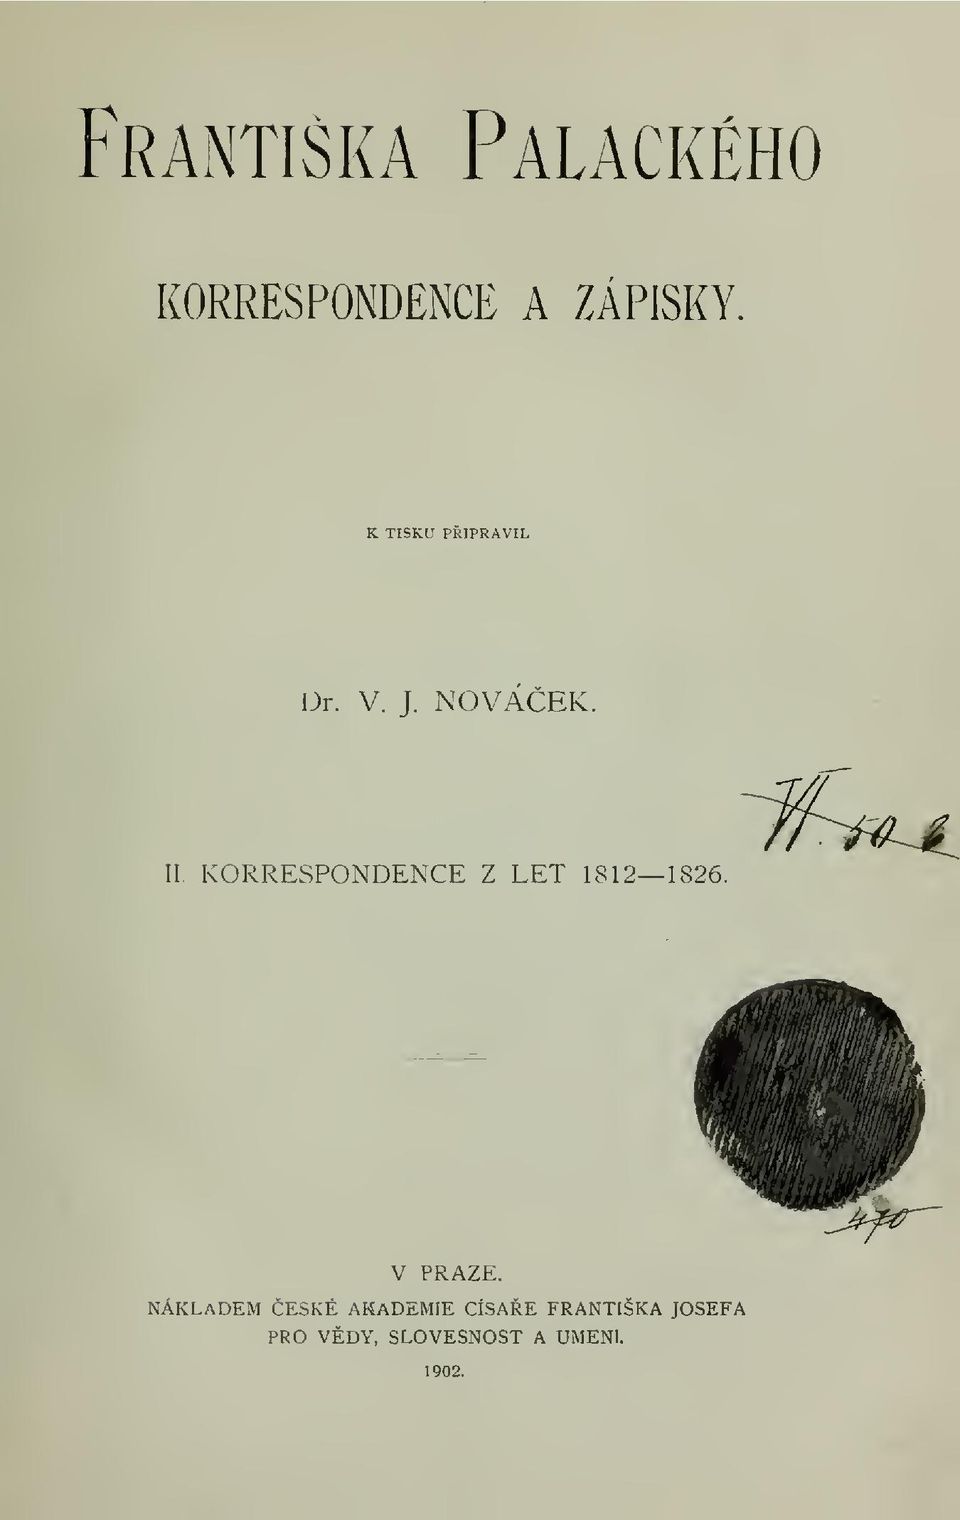 KORRESPONDENCE Z LET 1812 1826. ^W^^^iA^ v PRAZE.